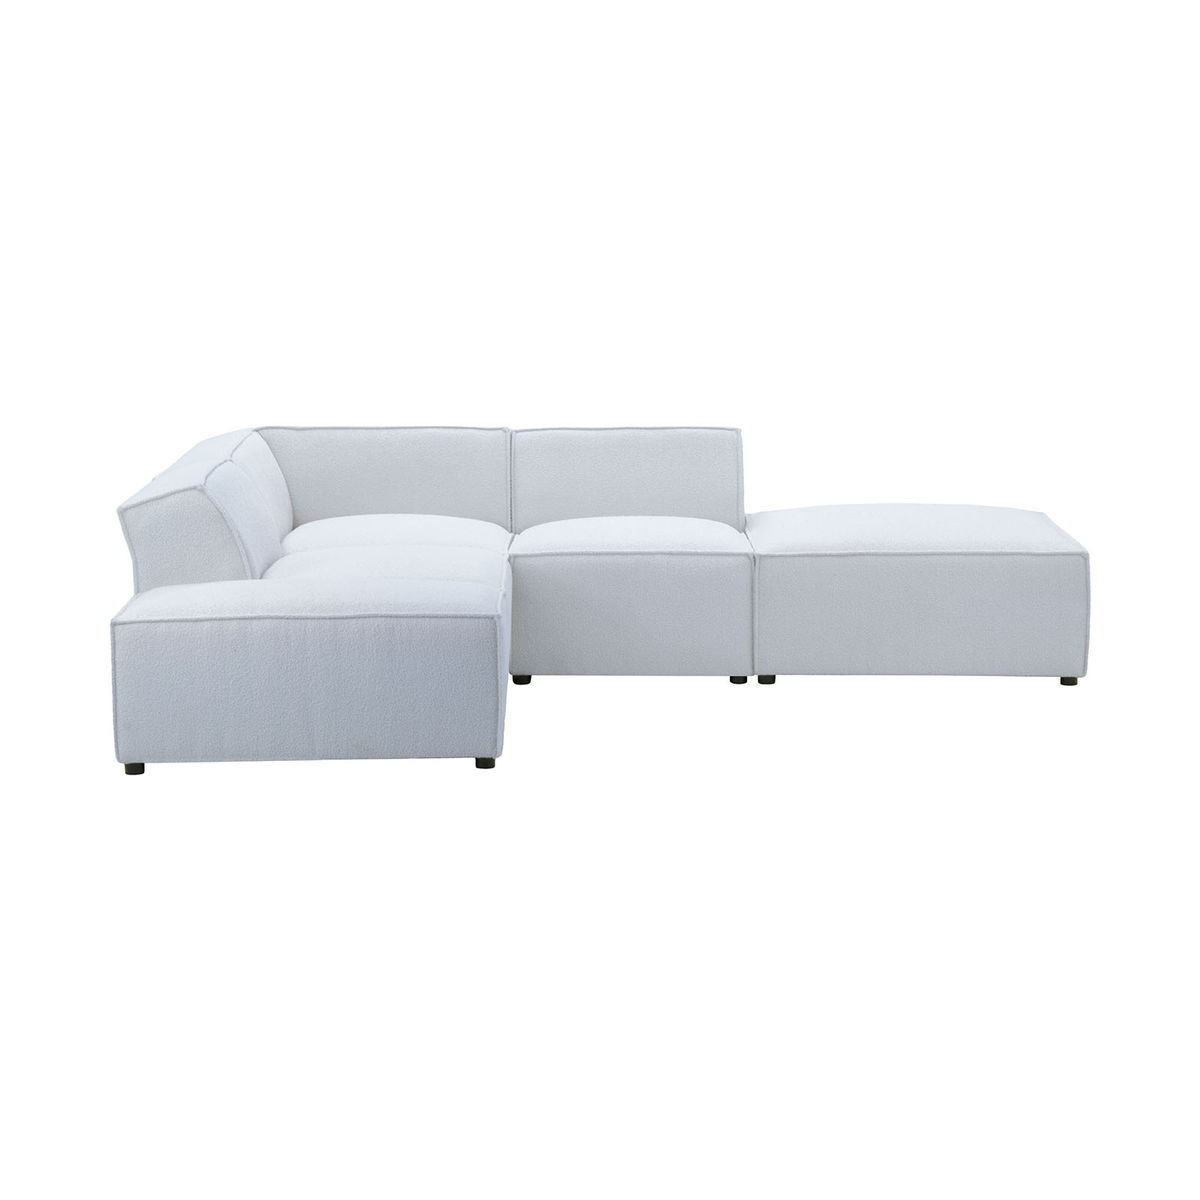 Mojo Modular Corner Sofa, boucle grey - image 1